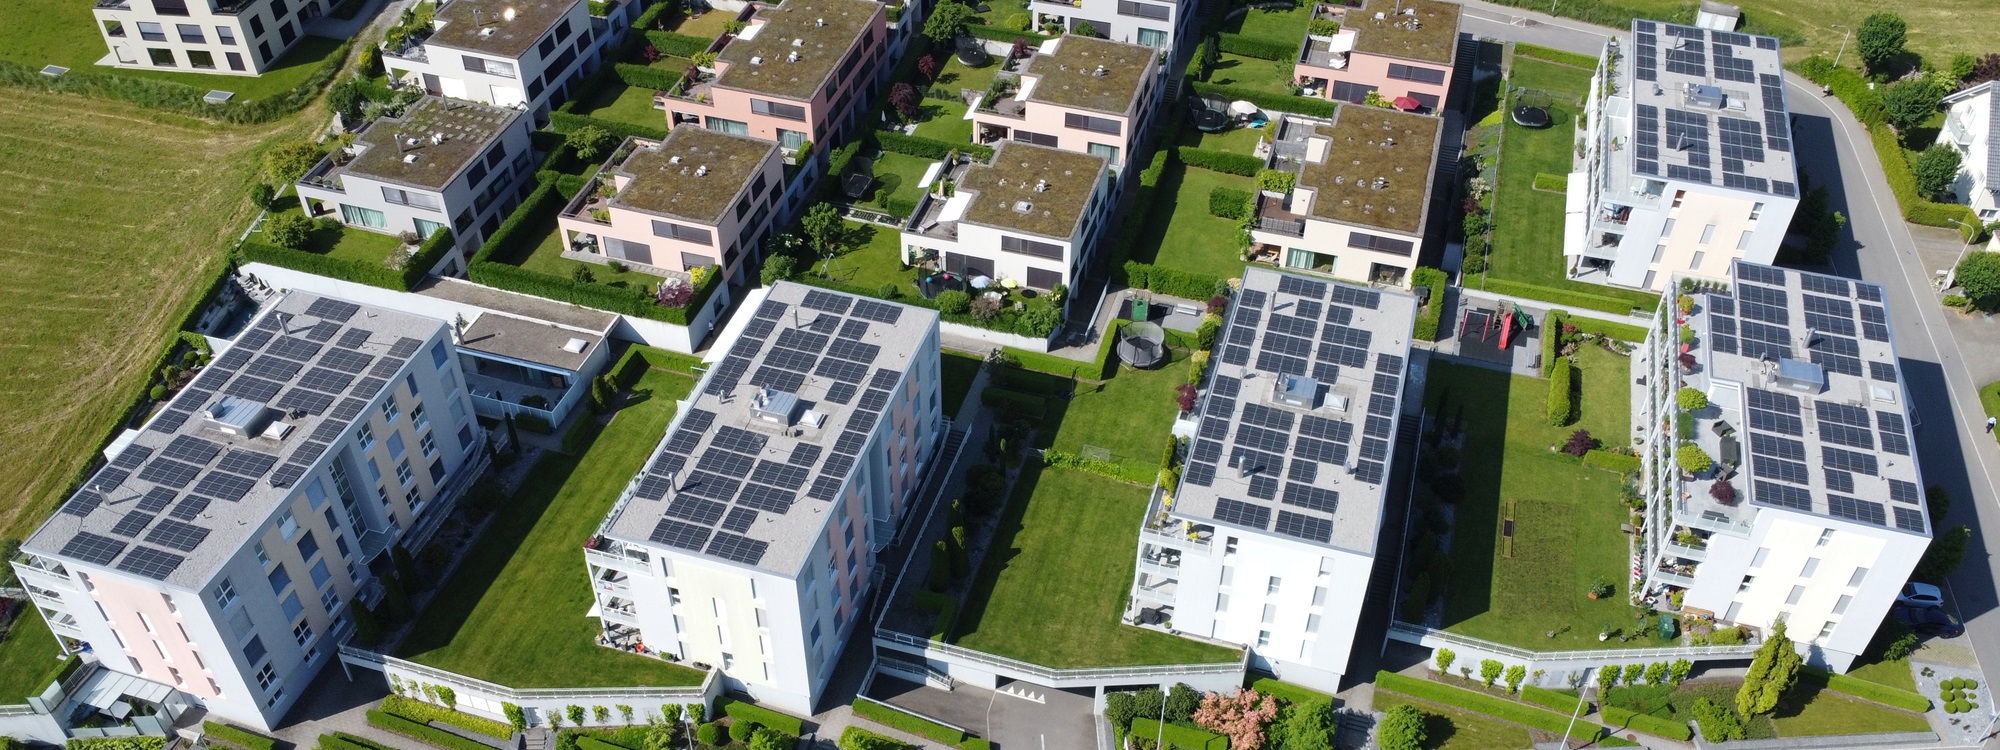 MFH / STWEG Solar / Photovoltaik RUTZ